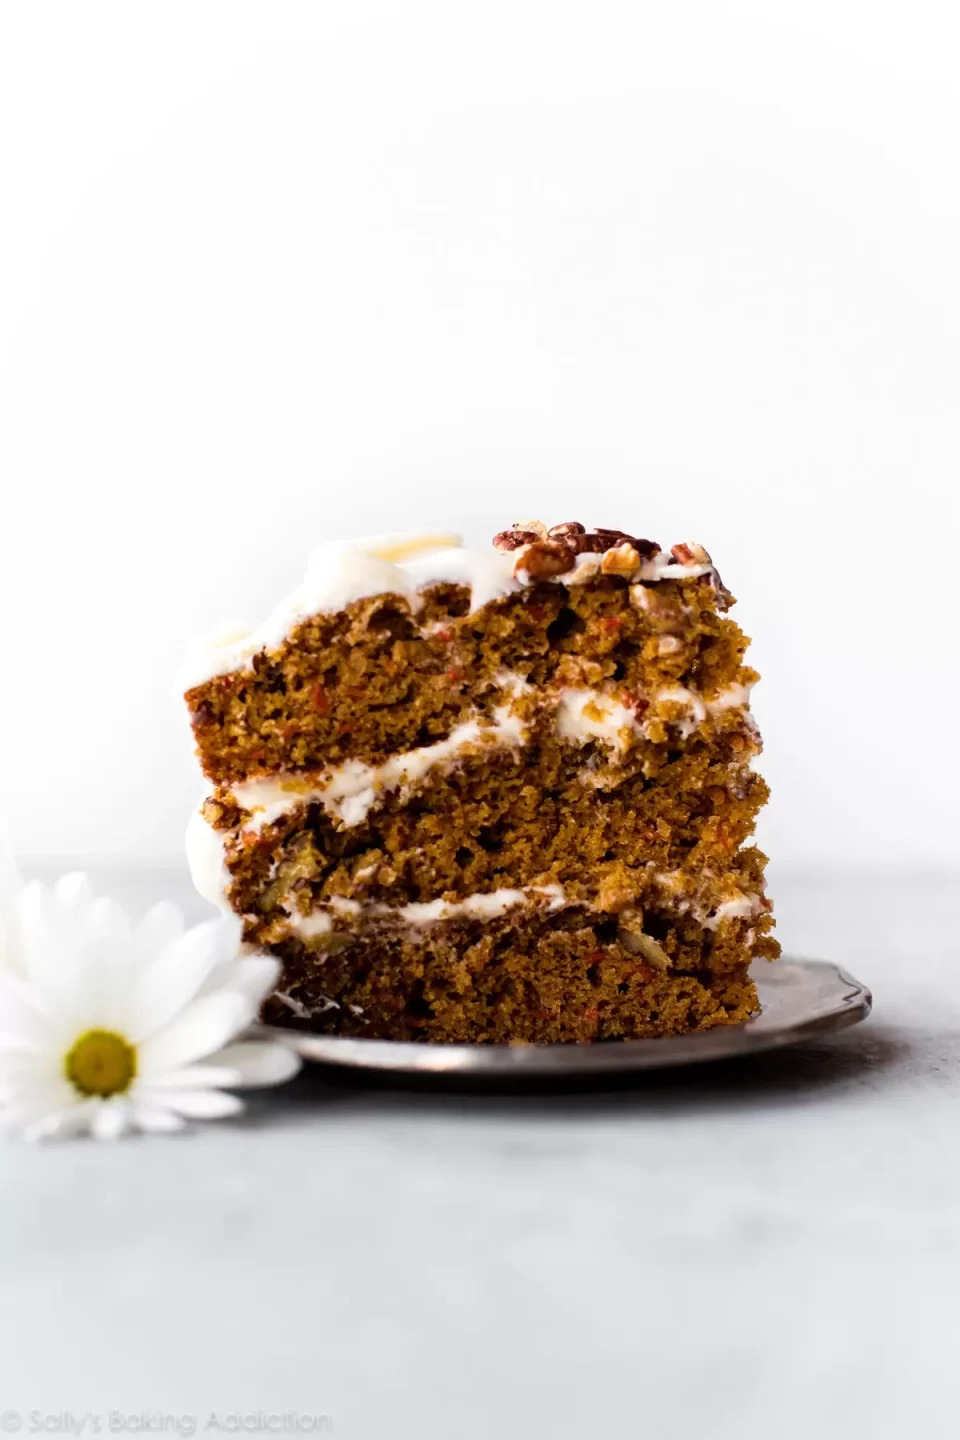 <a href="https://sallysbakingaddiction.com/my-favorite-carrot-cake-recipe/" target="_blank" rel="noopener noreferrer"><strong>Get the "My Favorite Carrot Cake Recipe" from Sally's Baking Addiction</strong></a>